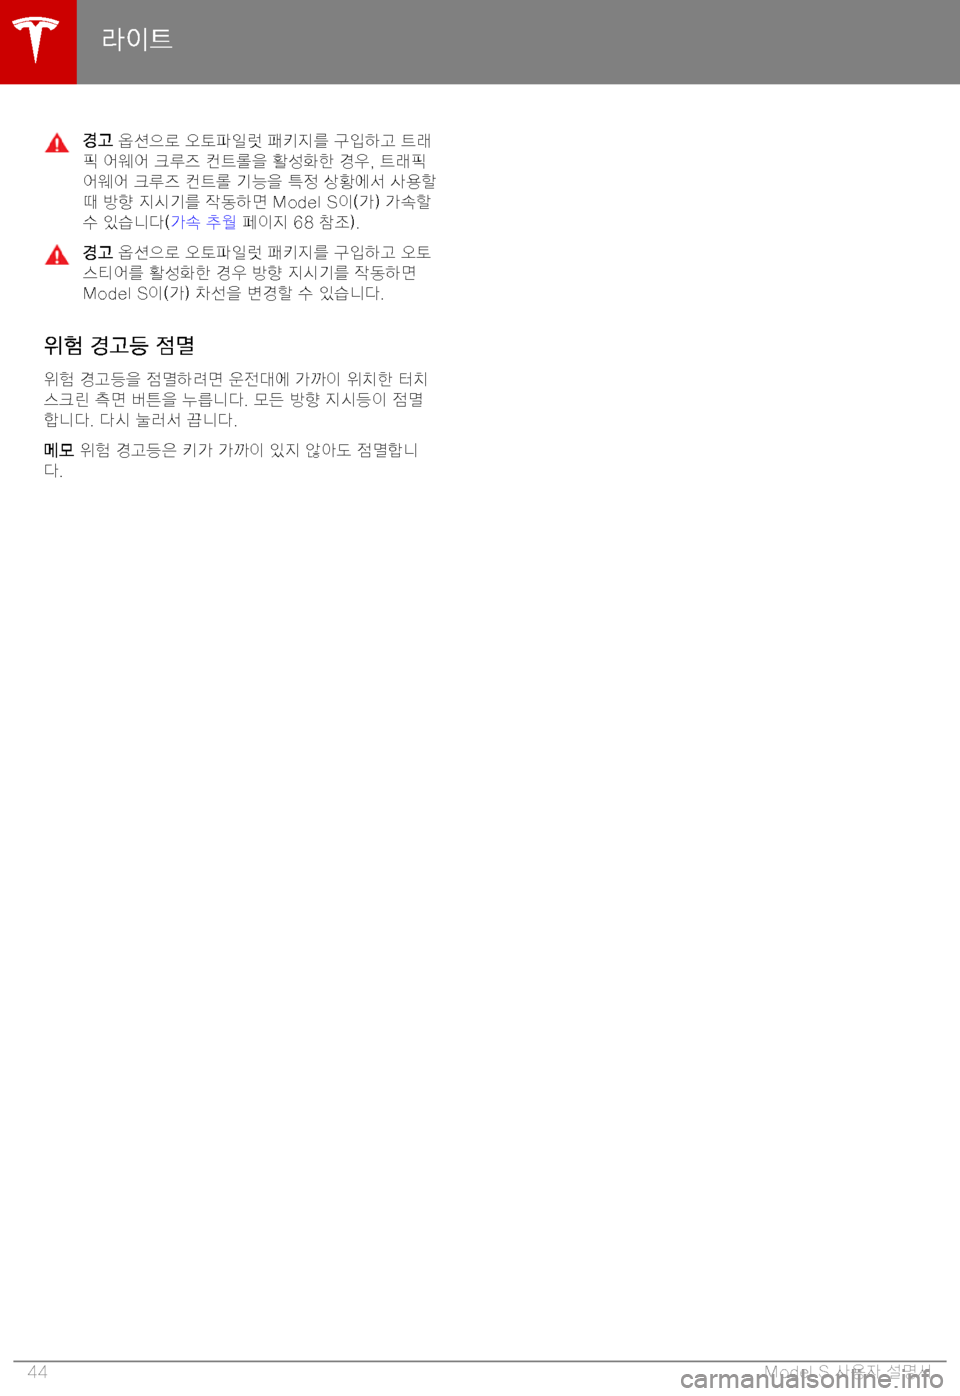 TESLA MODEL S 2019  사용자 가이드 (in Korean) "